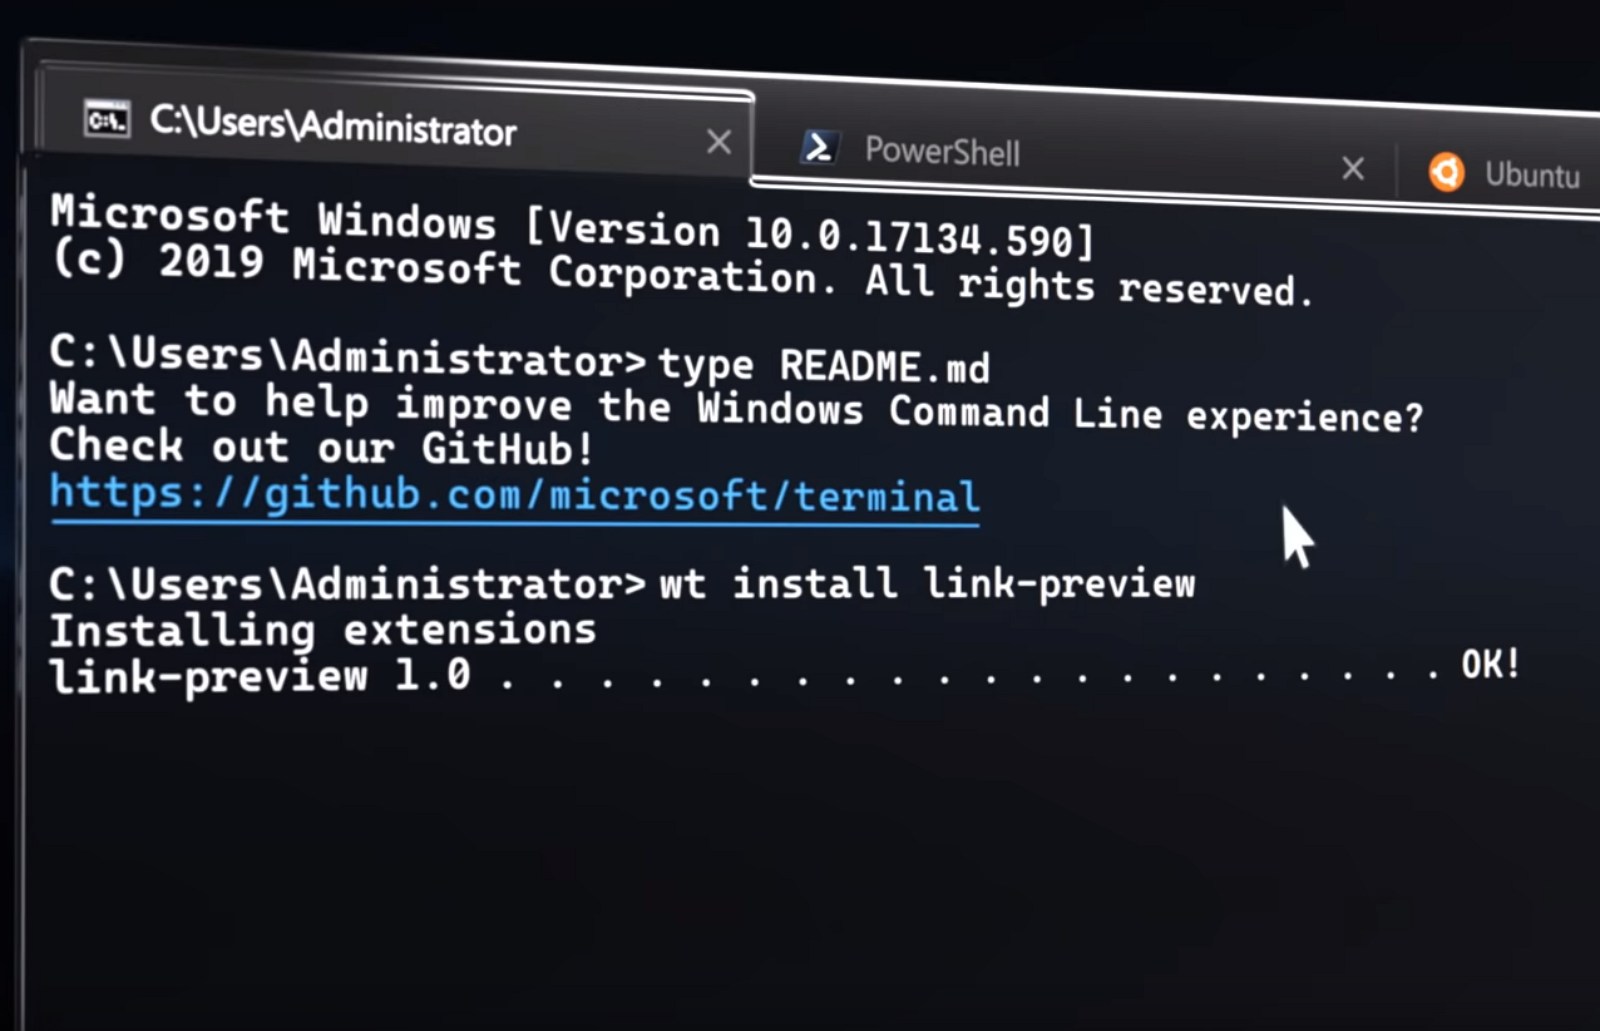 program list command prompt windows 10